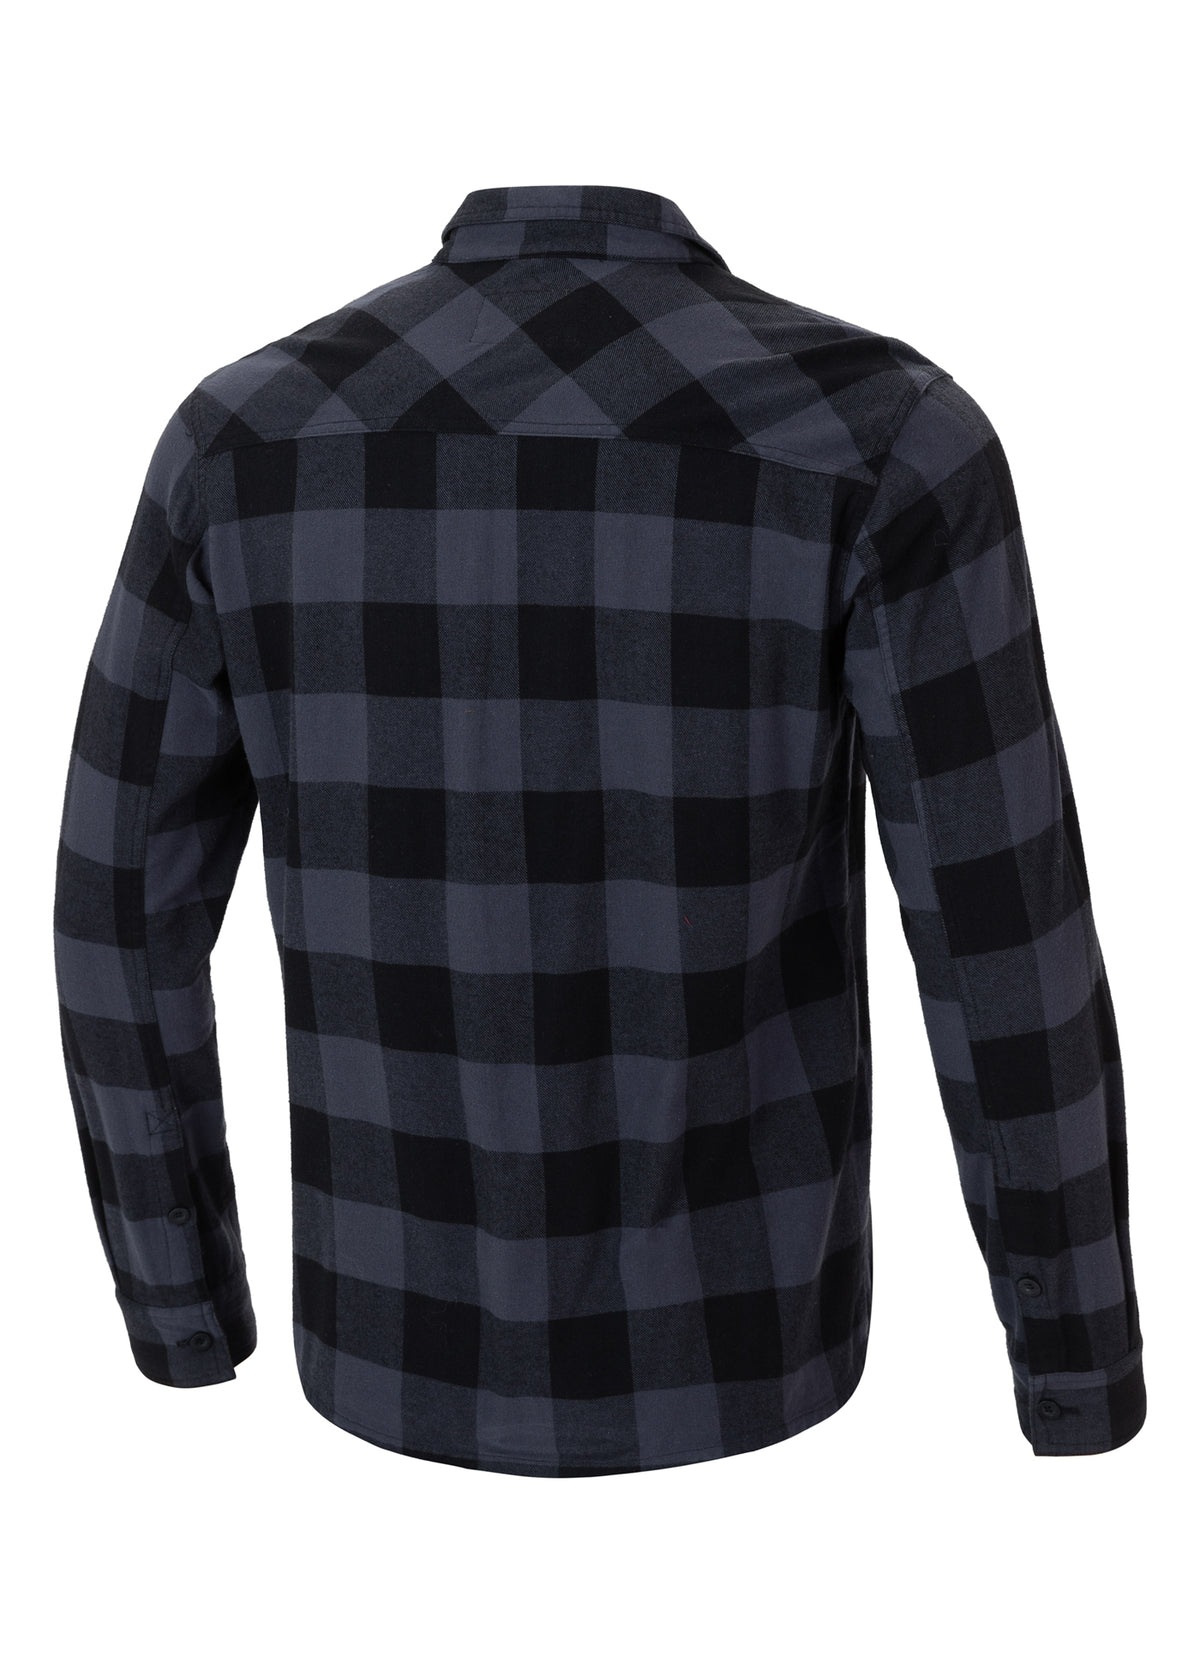 MITCHELL Grey/Black Flannel Shirt - Pitbullstore.eu